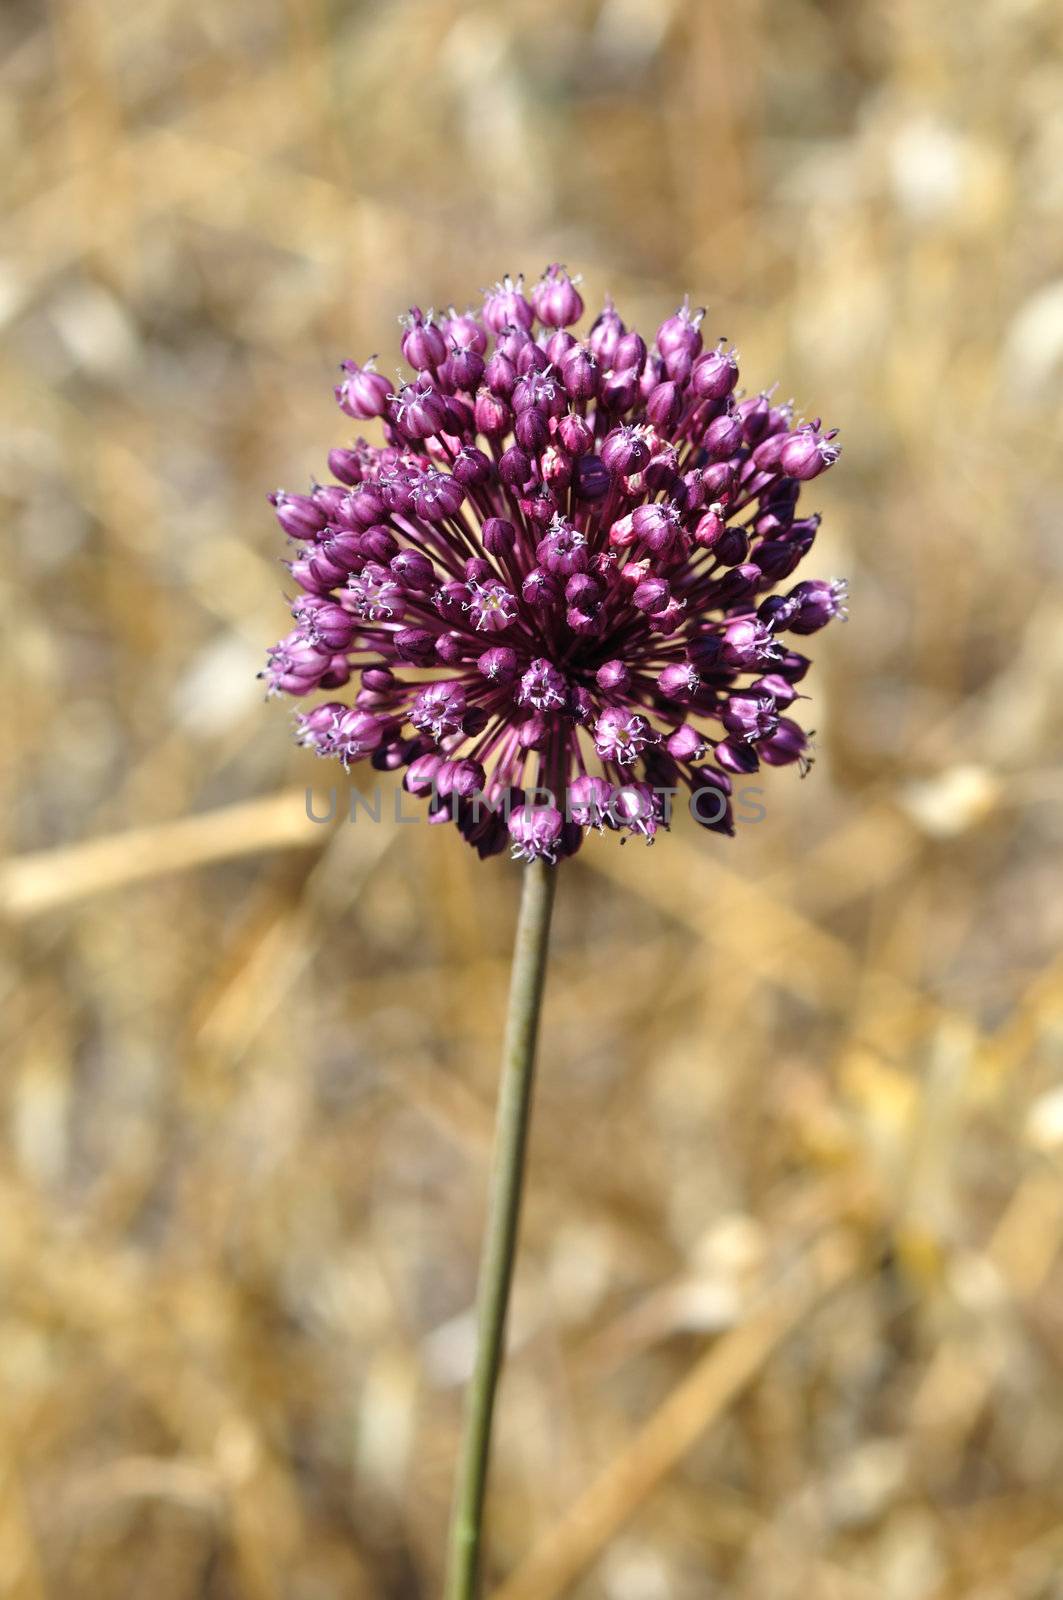 Purple allium flowering plant abstract nature background. Selective focus.